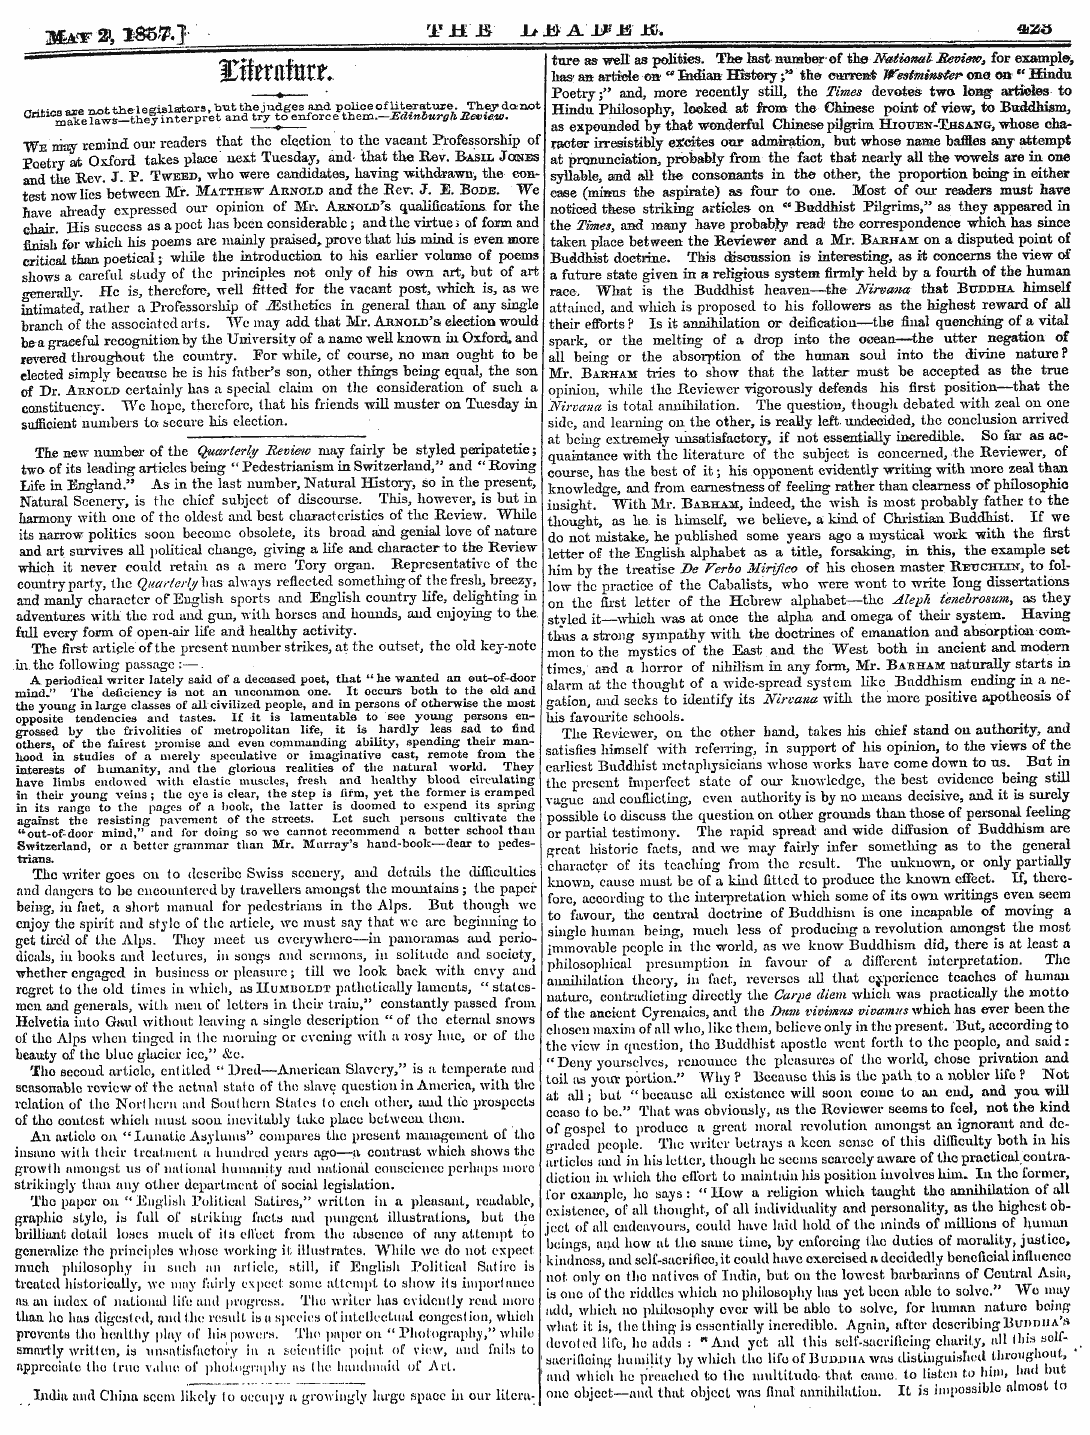 Leader (1850-1860): jS F Y, 2nd edition - ^Tti^Frtfttrp' 3lx\, \ Wxuxx*. '